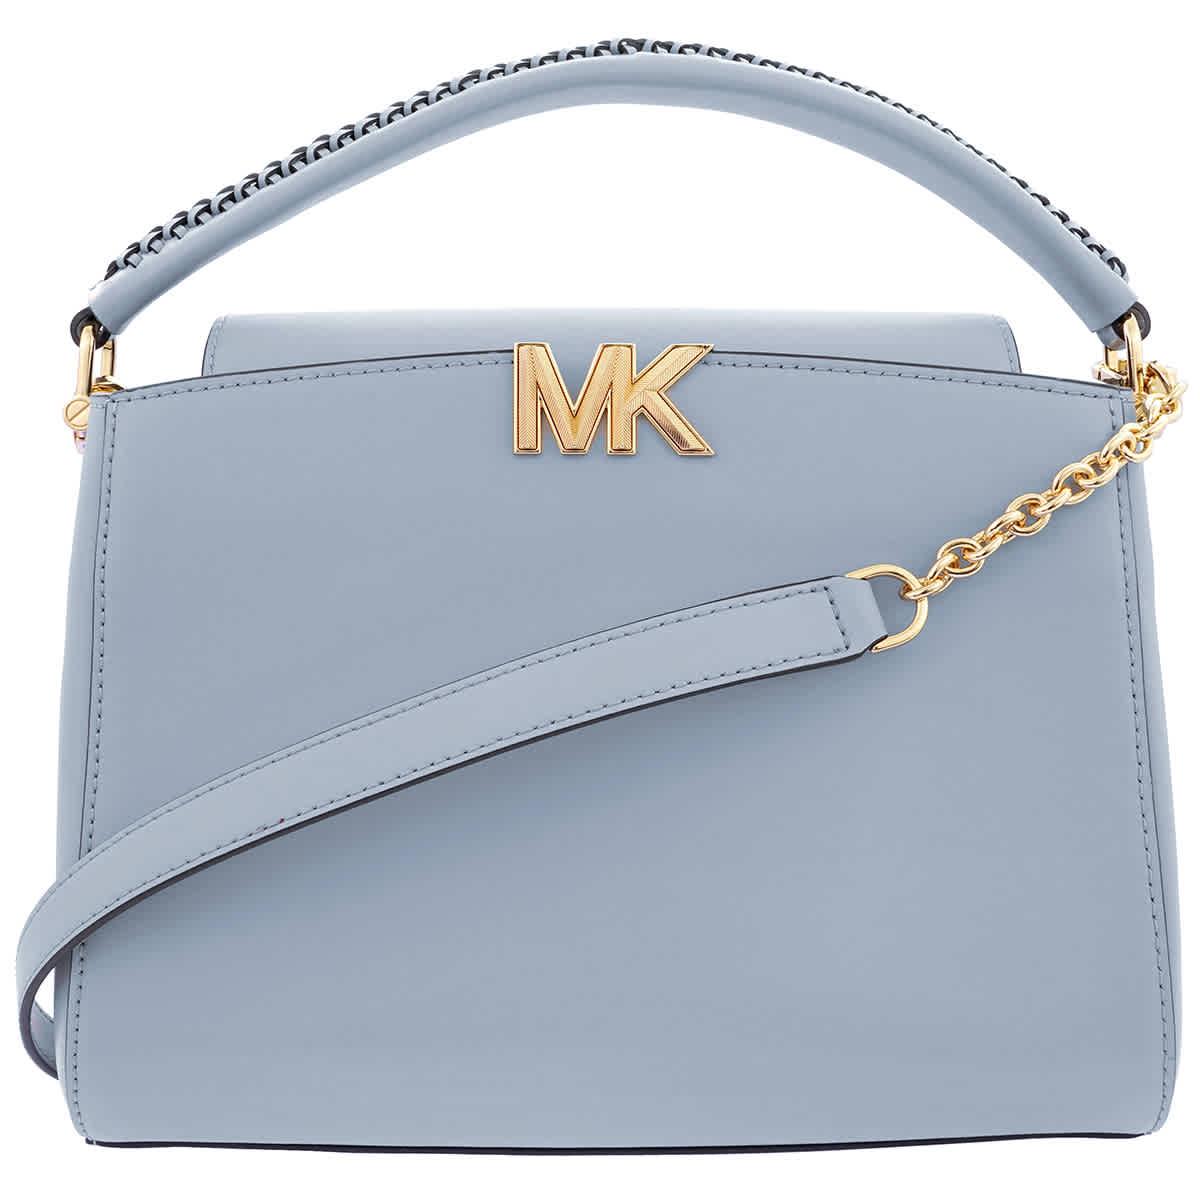 Michael Kors Karlie Medium Leather Satchel Bag in Blue | Lyst Canada